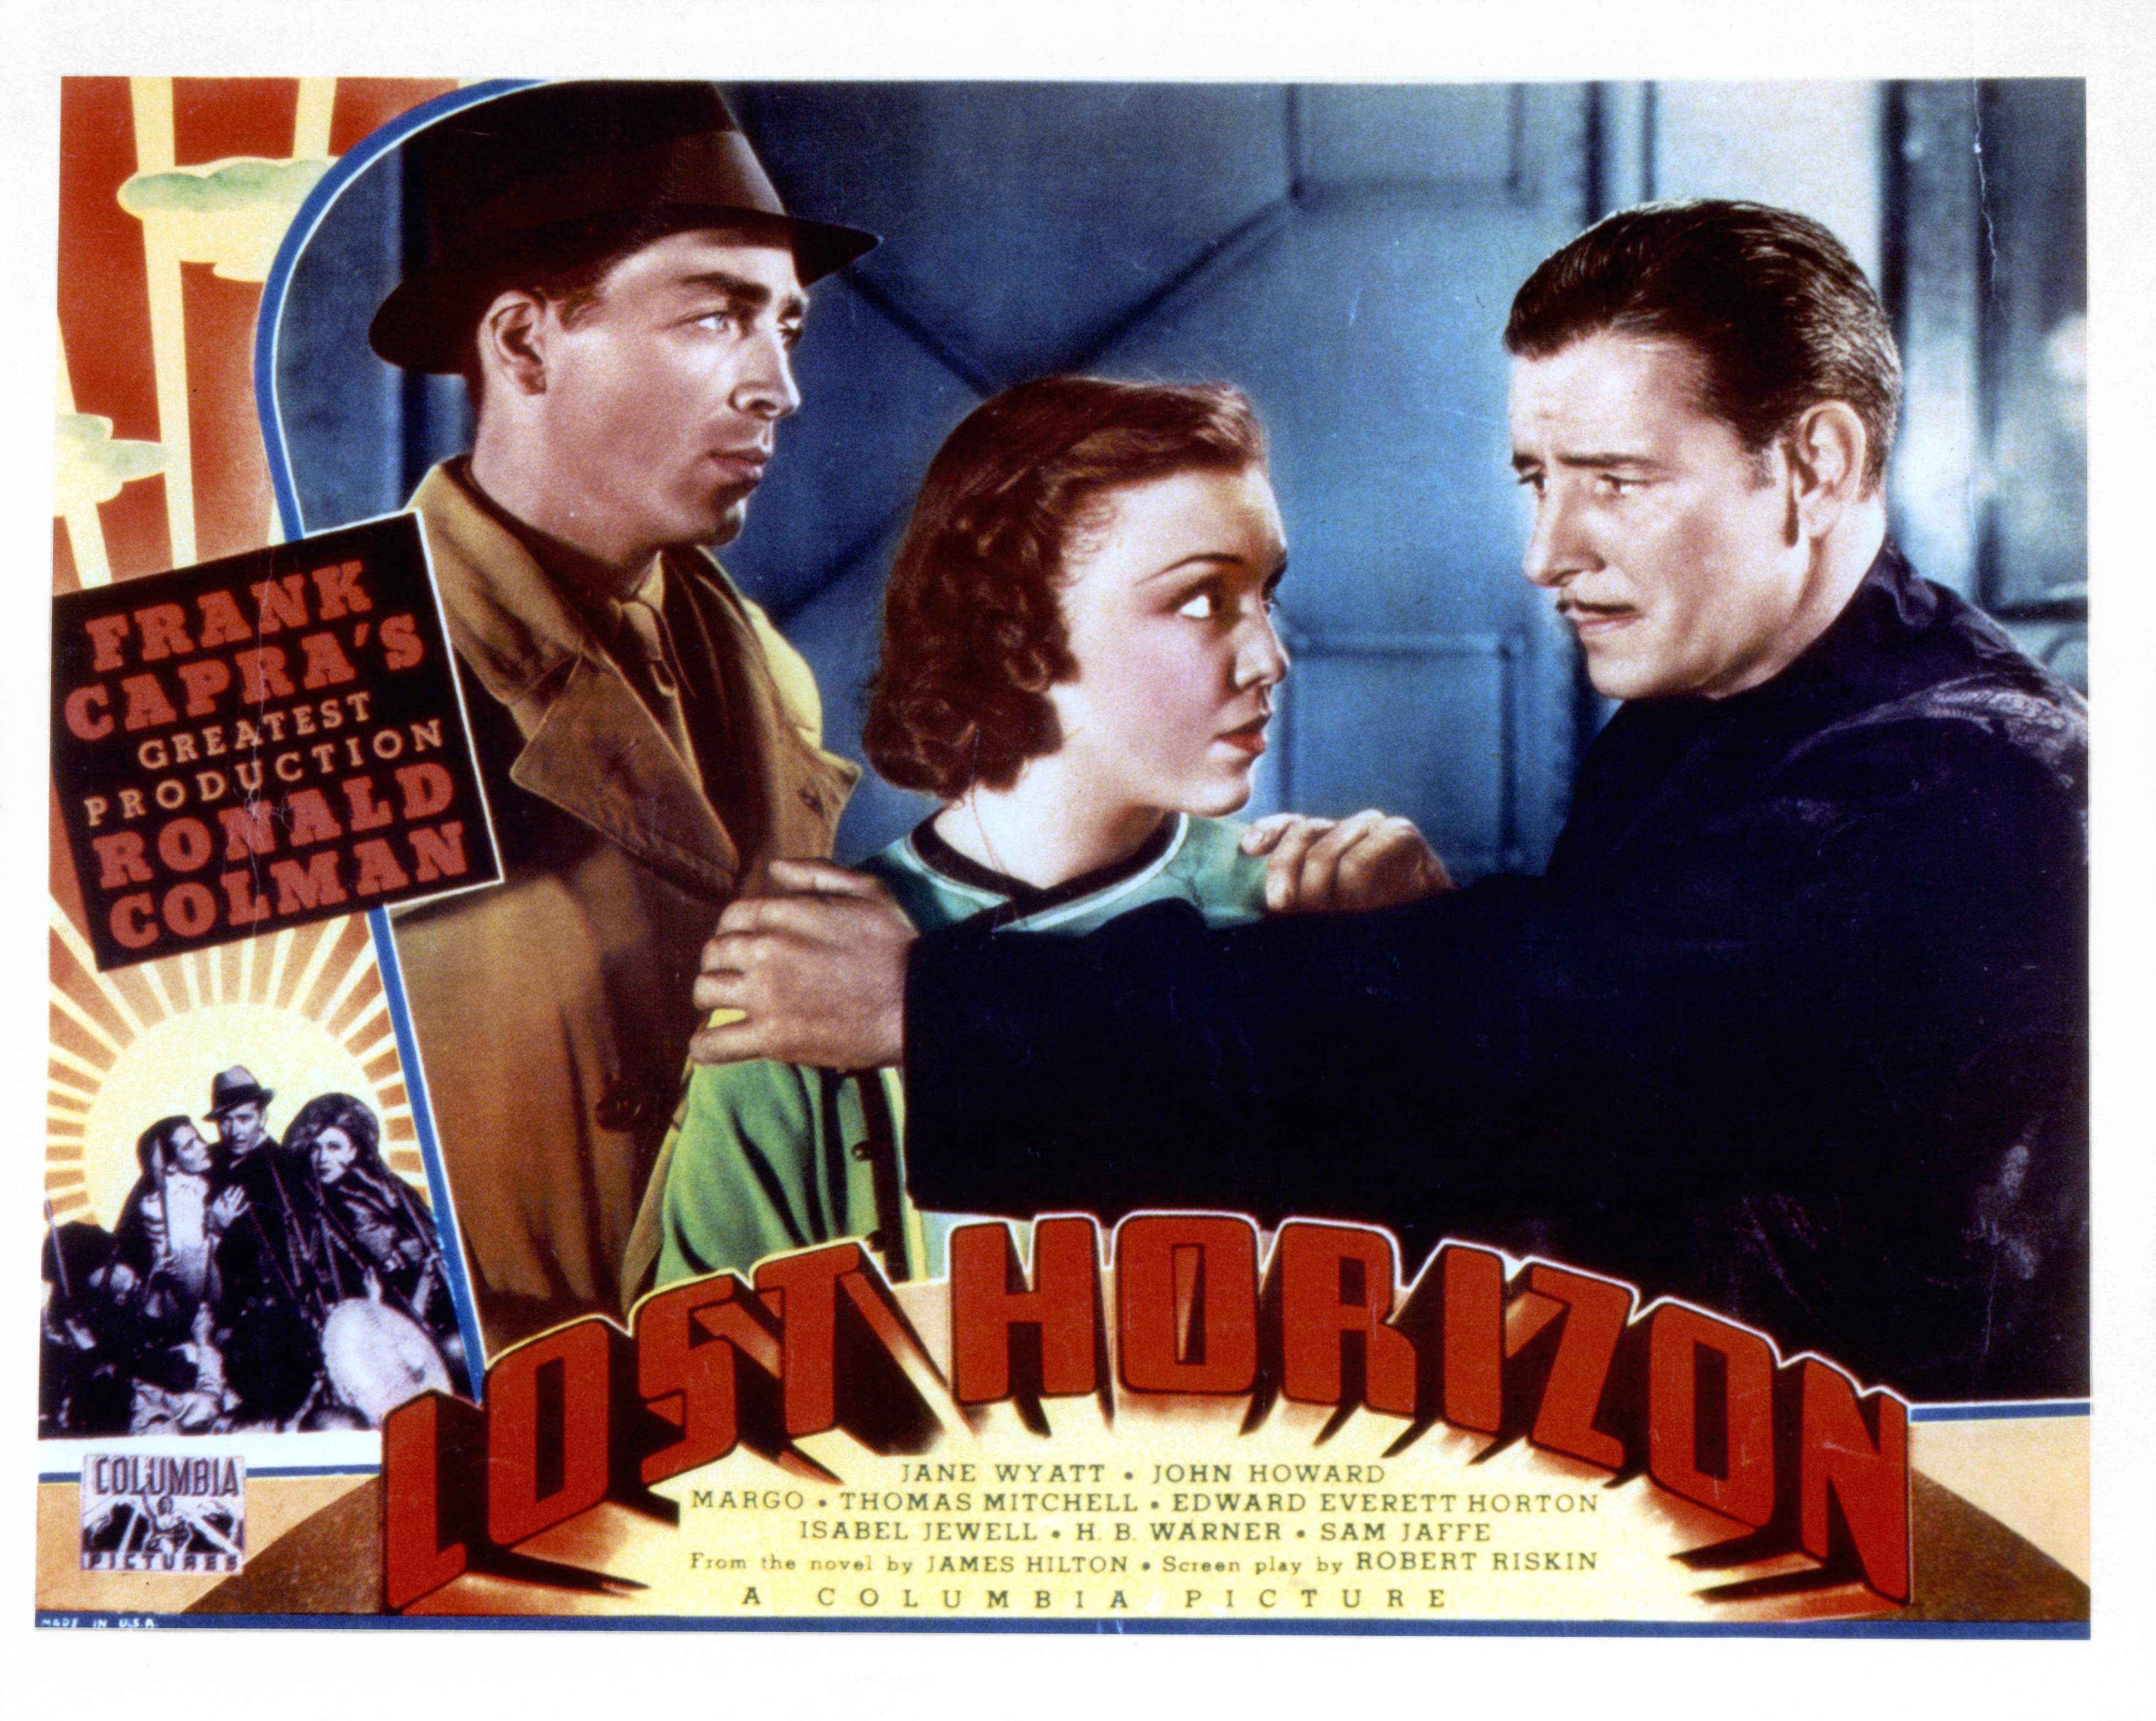 Edward Everett Horton, Ronald Colman and Margo in Lost Horizon (1937)